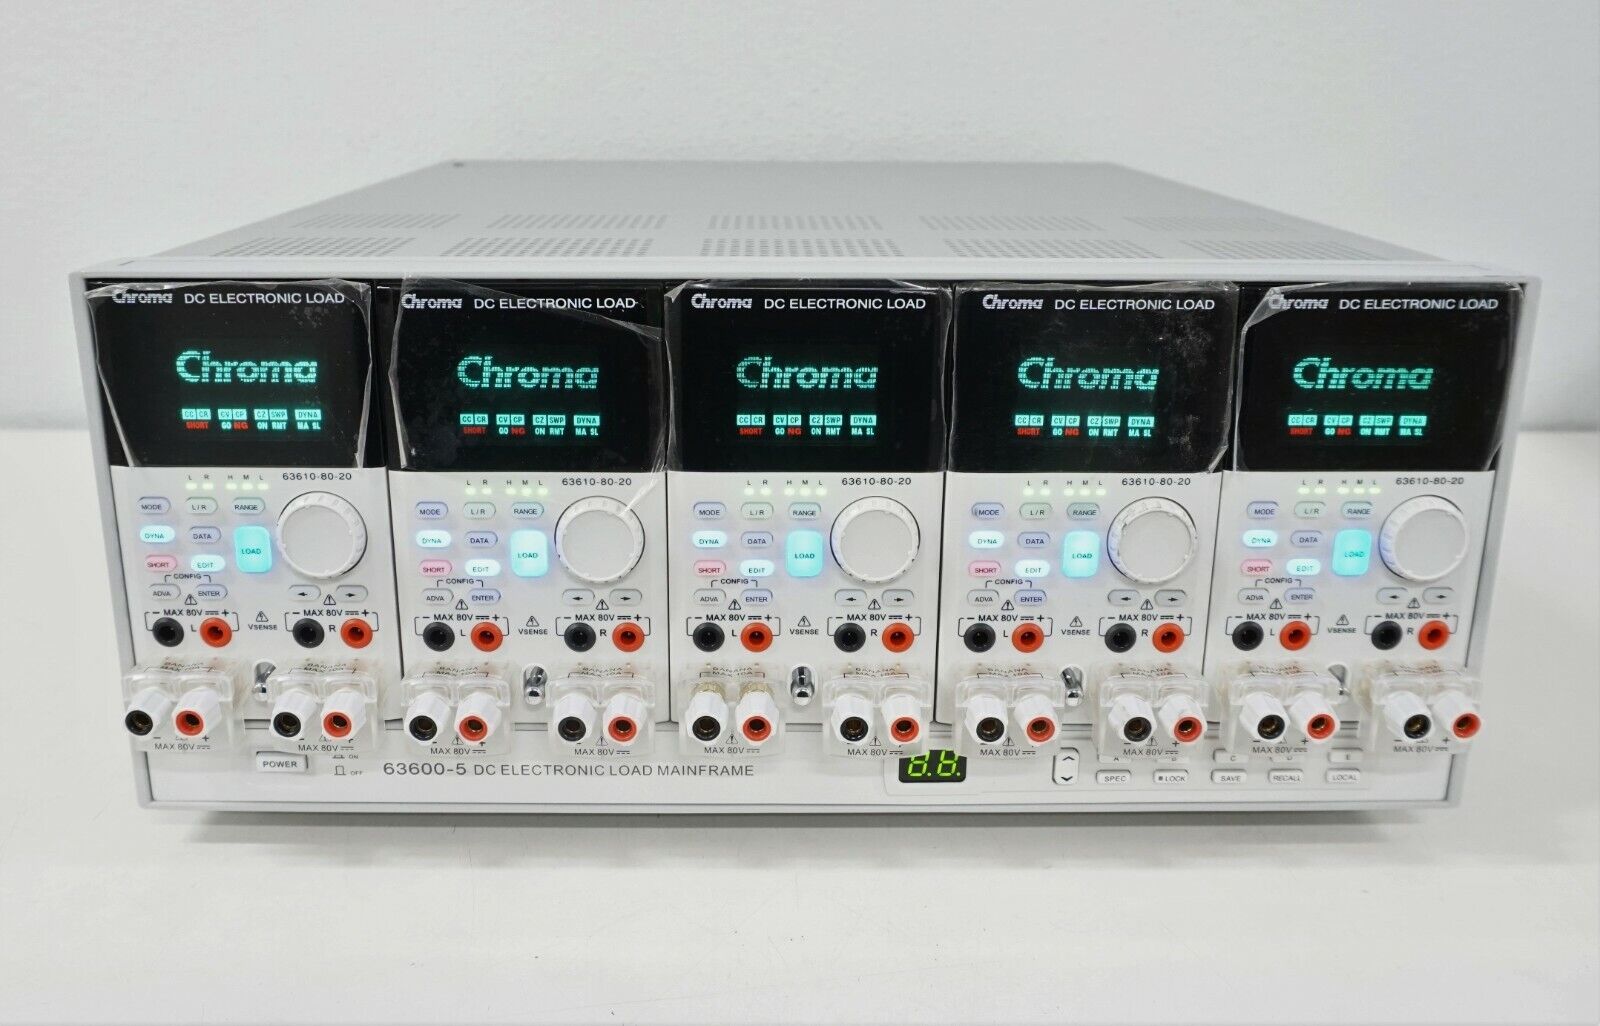 Chroma 63600-5 DC Electronic Load Mainframe & QTY: 5 Chroma 63610-80-20 Modules